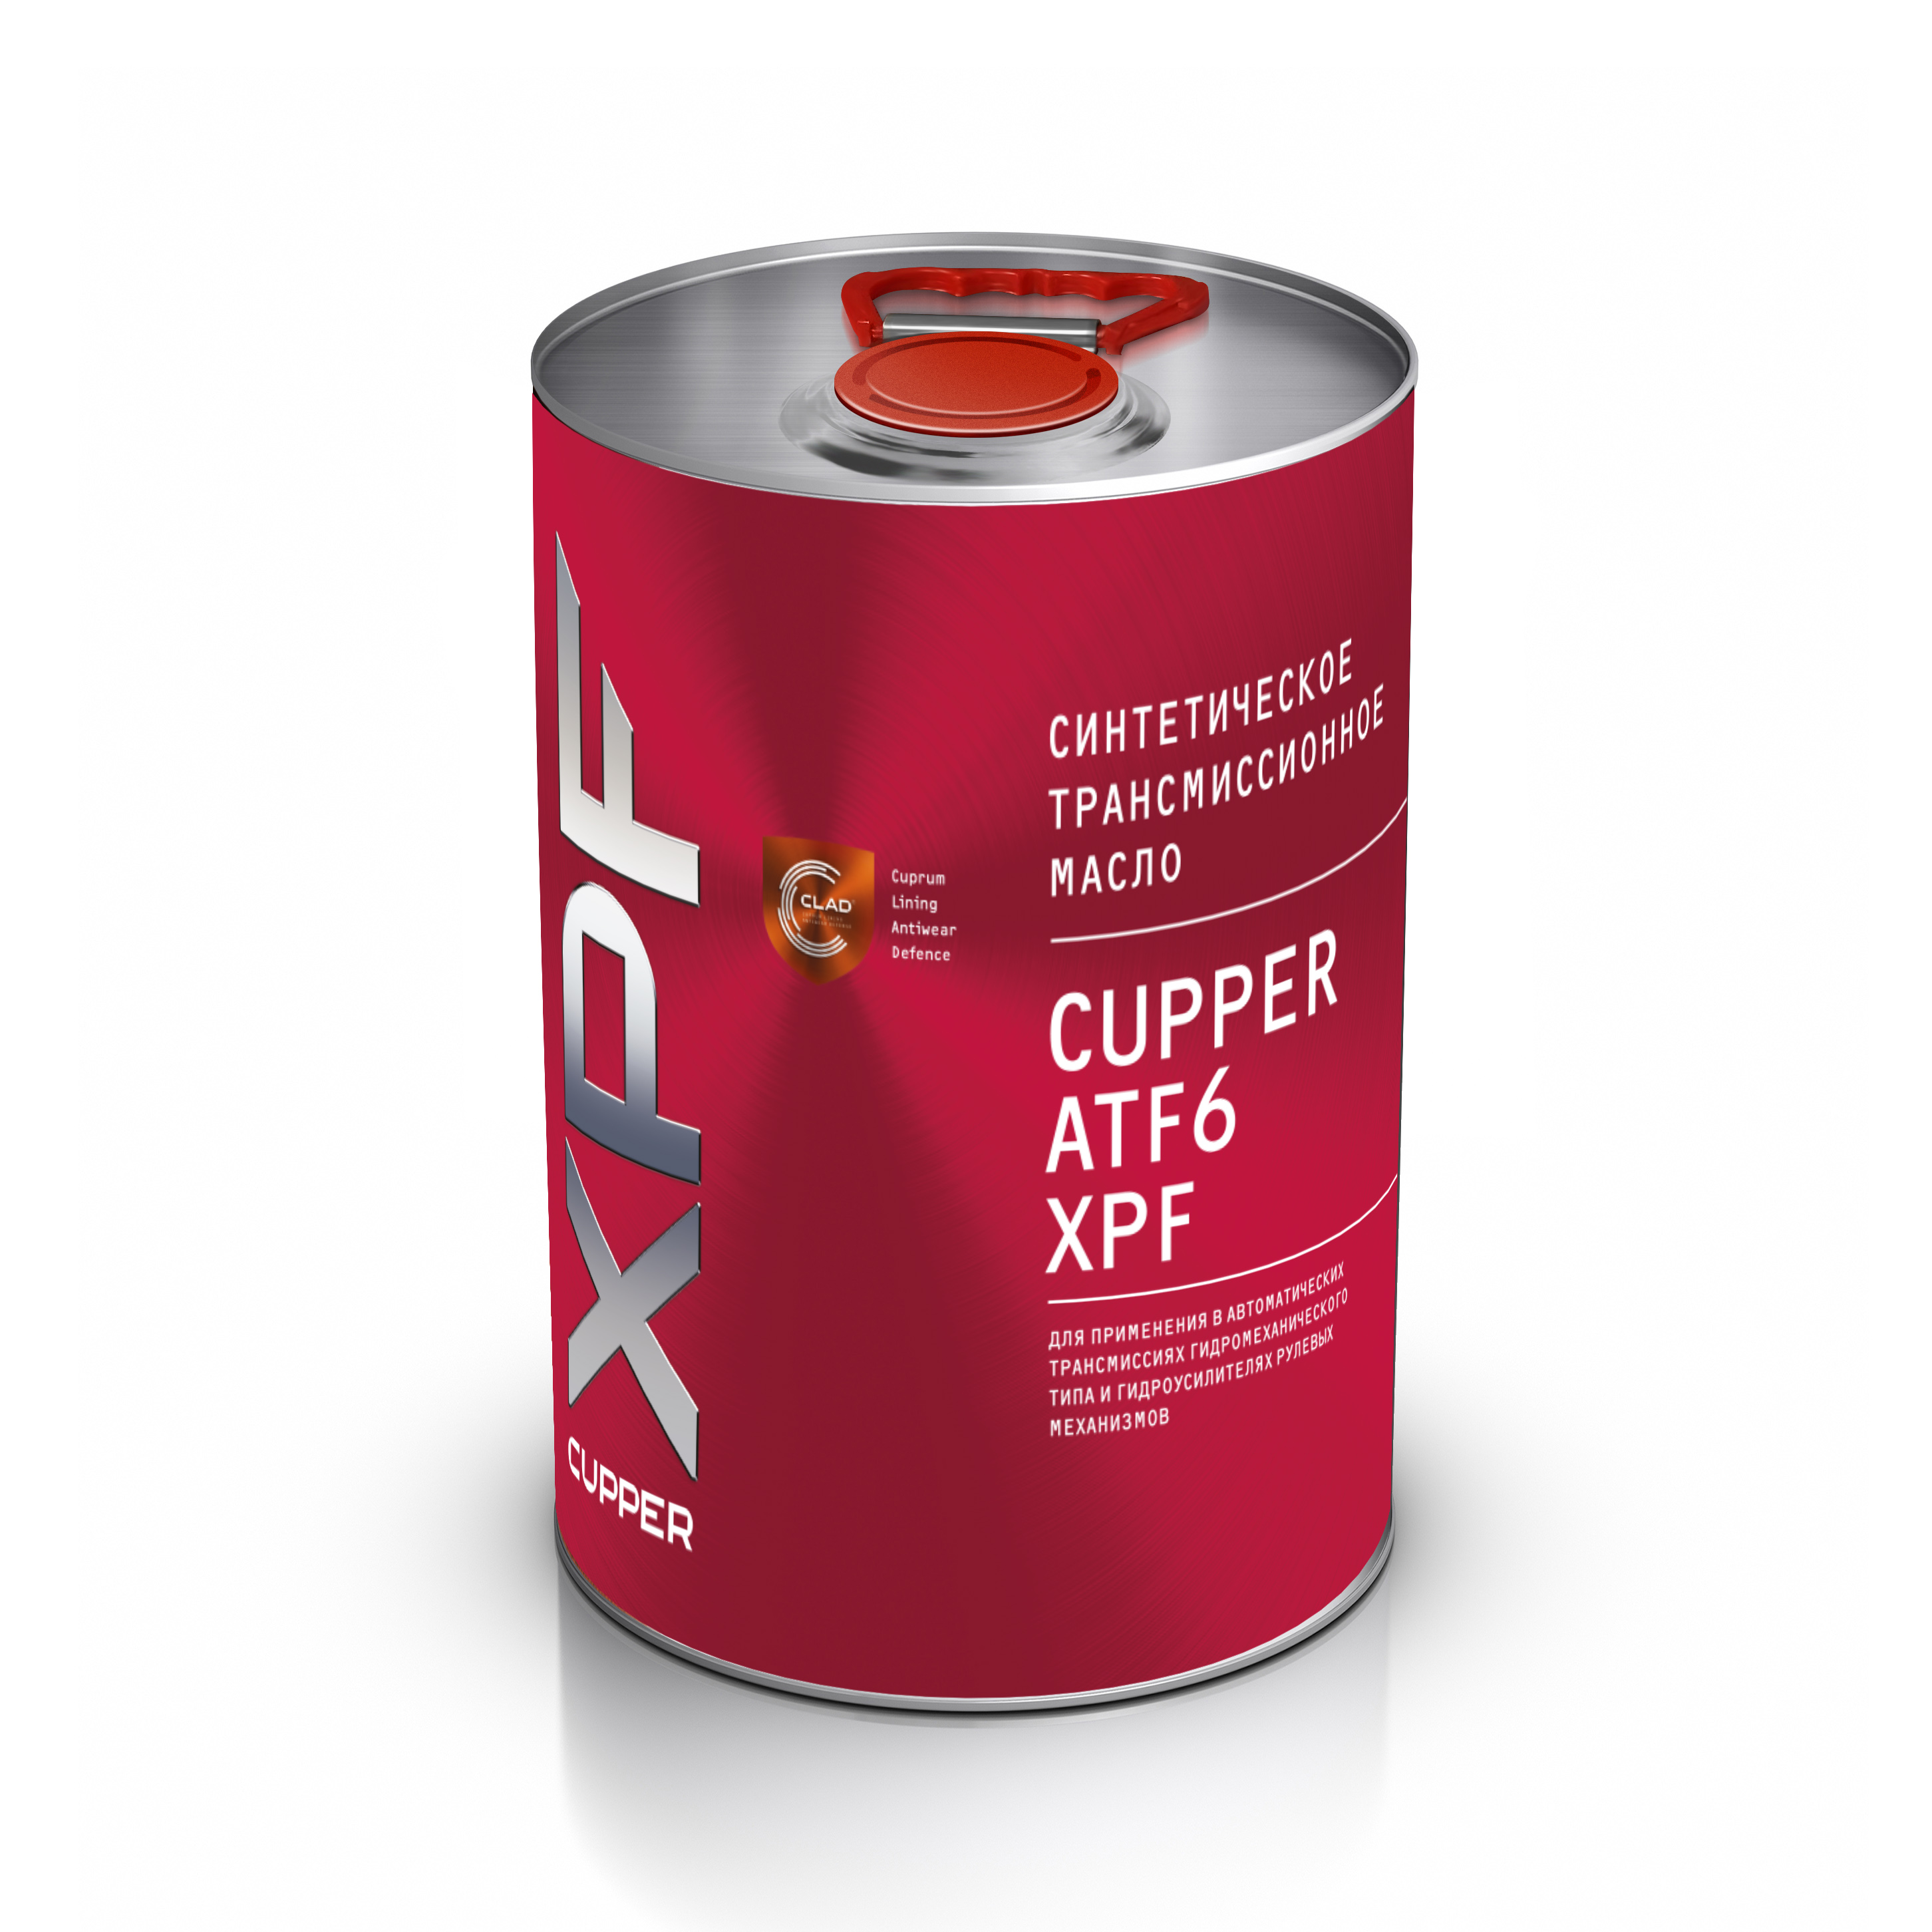 Cupper масло трансмиссионное. Cupper atf2+ XPF артикул. ATF 6. Масло японское 75w85.